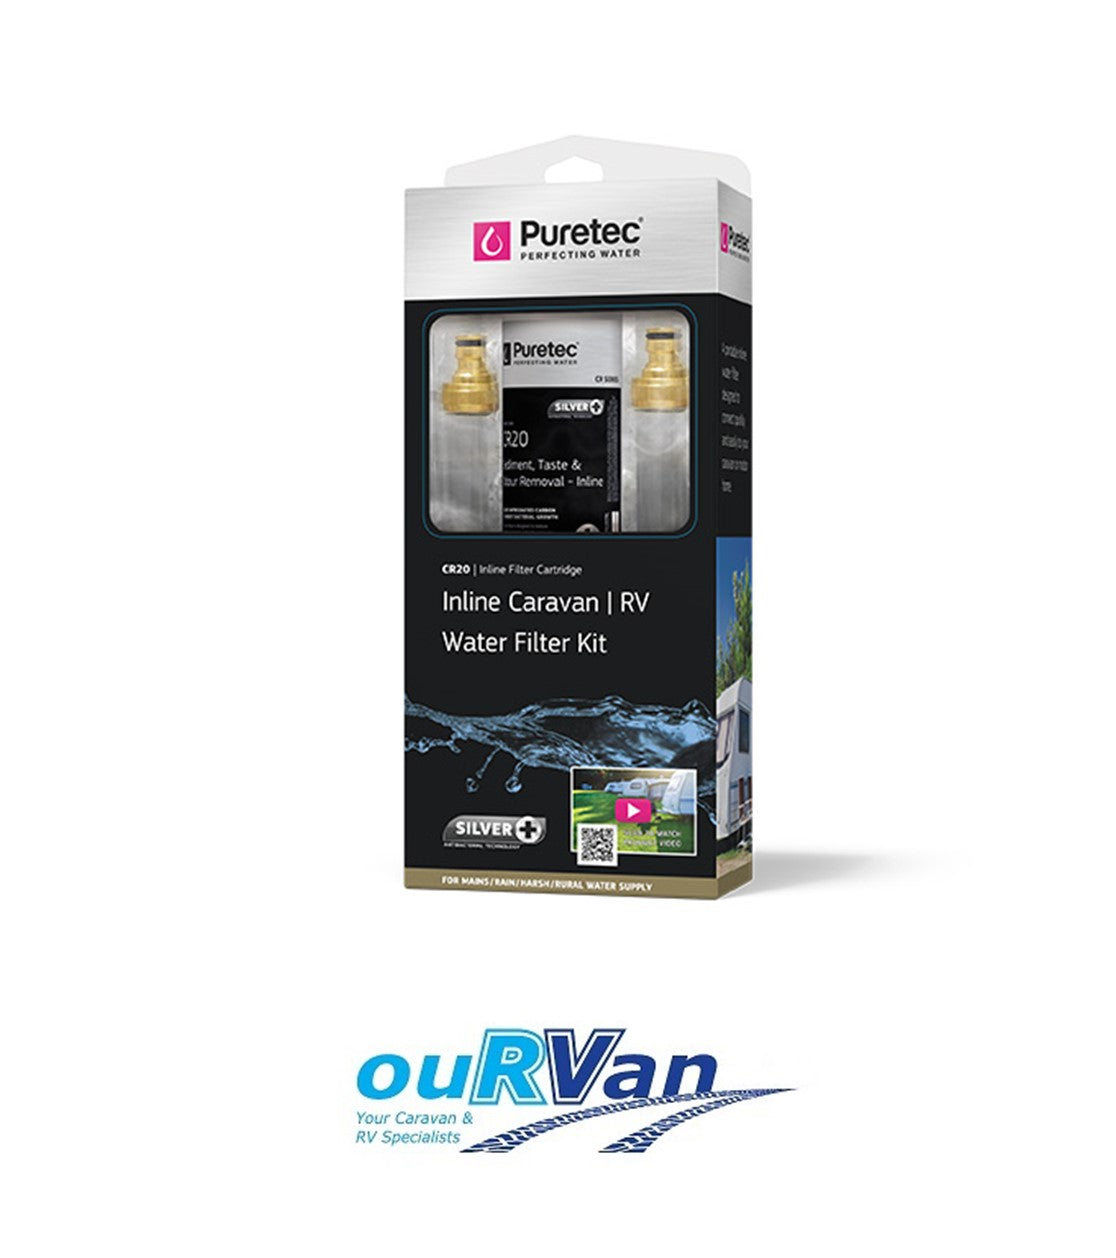 Premium Caravan Starter Pack - Includes Free Shipping